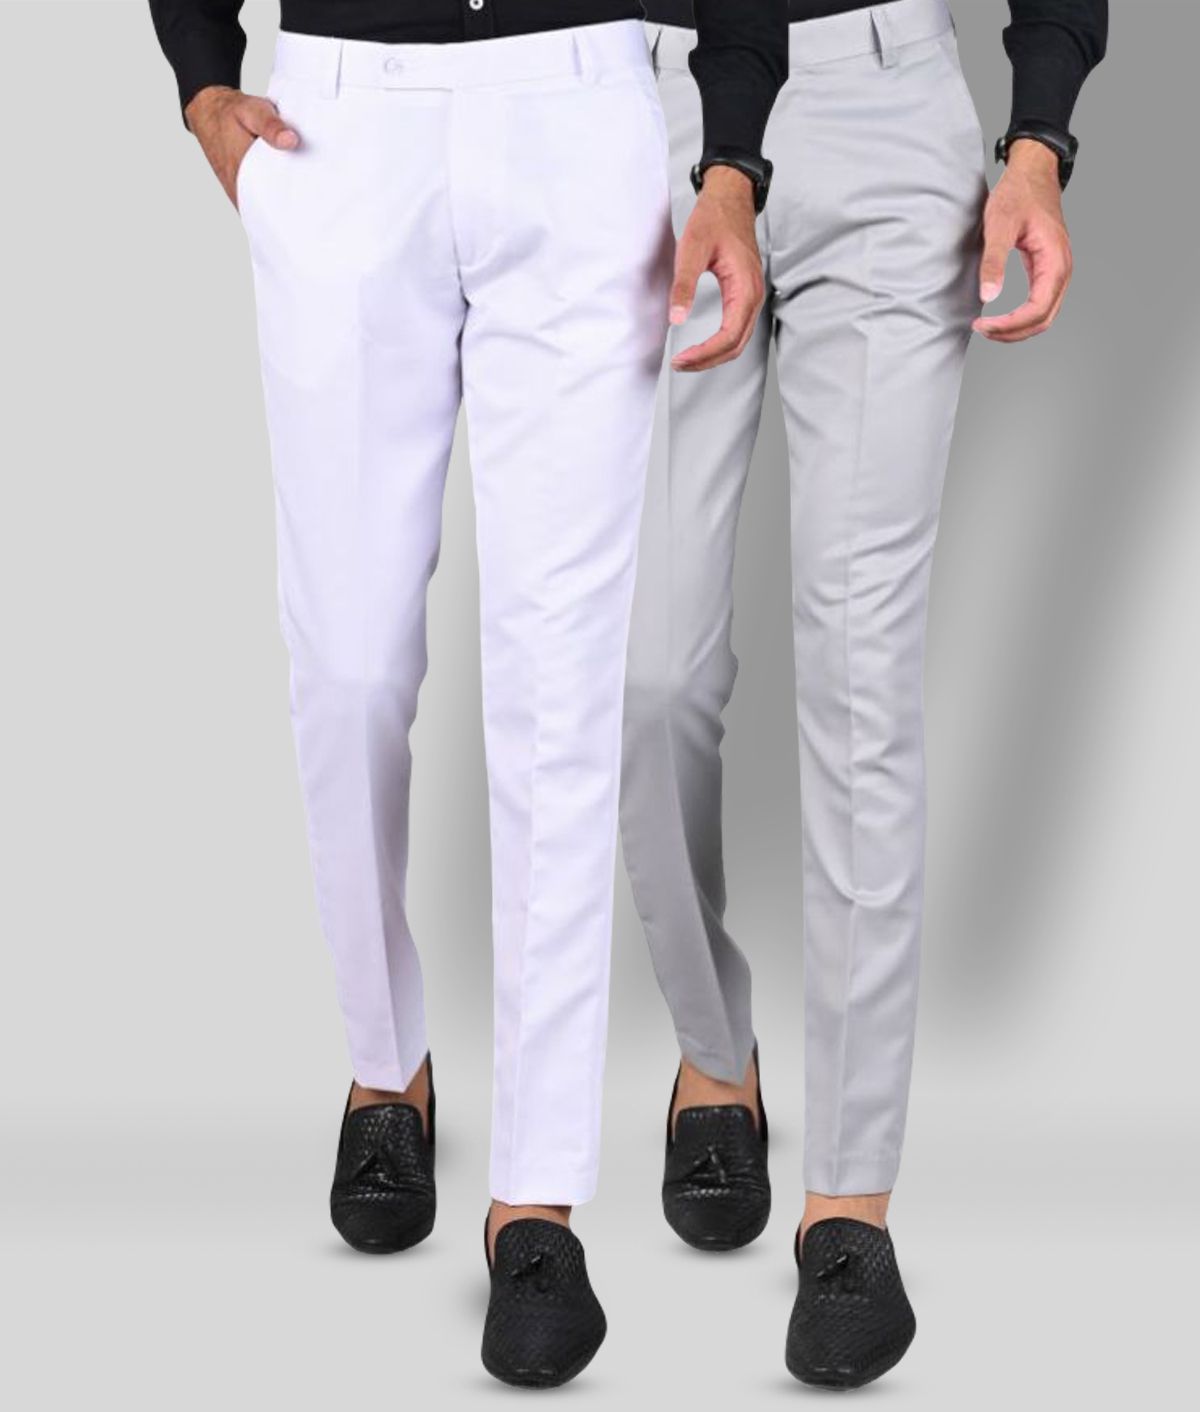     			MANCREW - Grey Polycotton Slim - Fit Men's Formal Pants ( Pack of 2 )